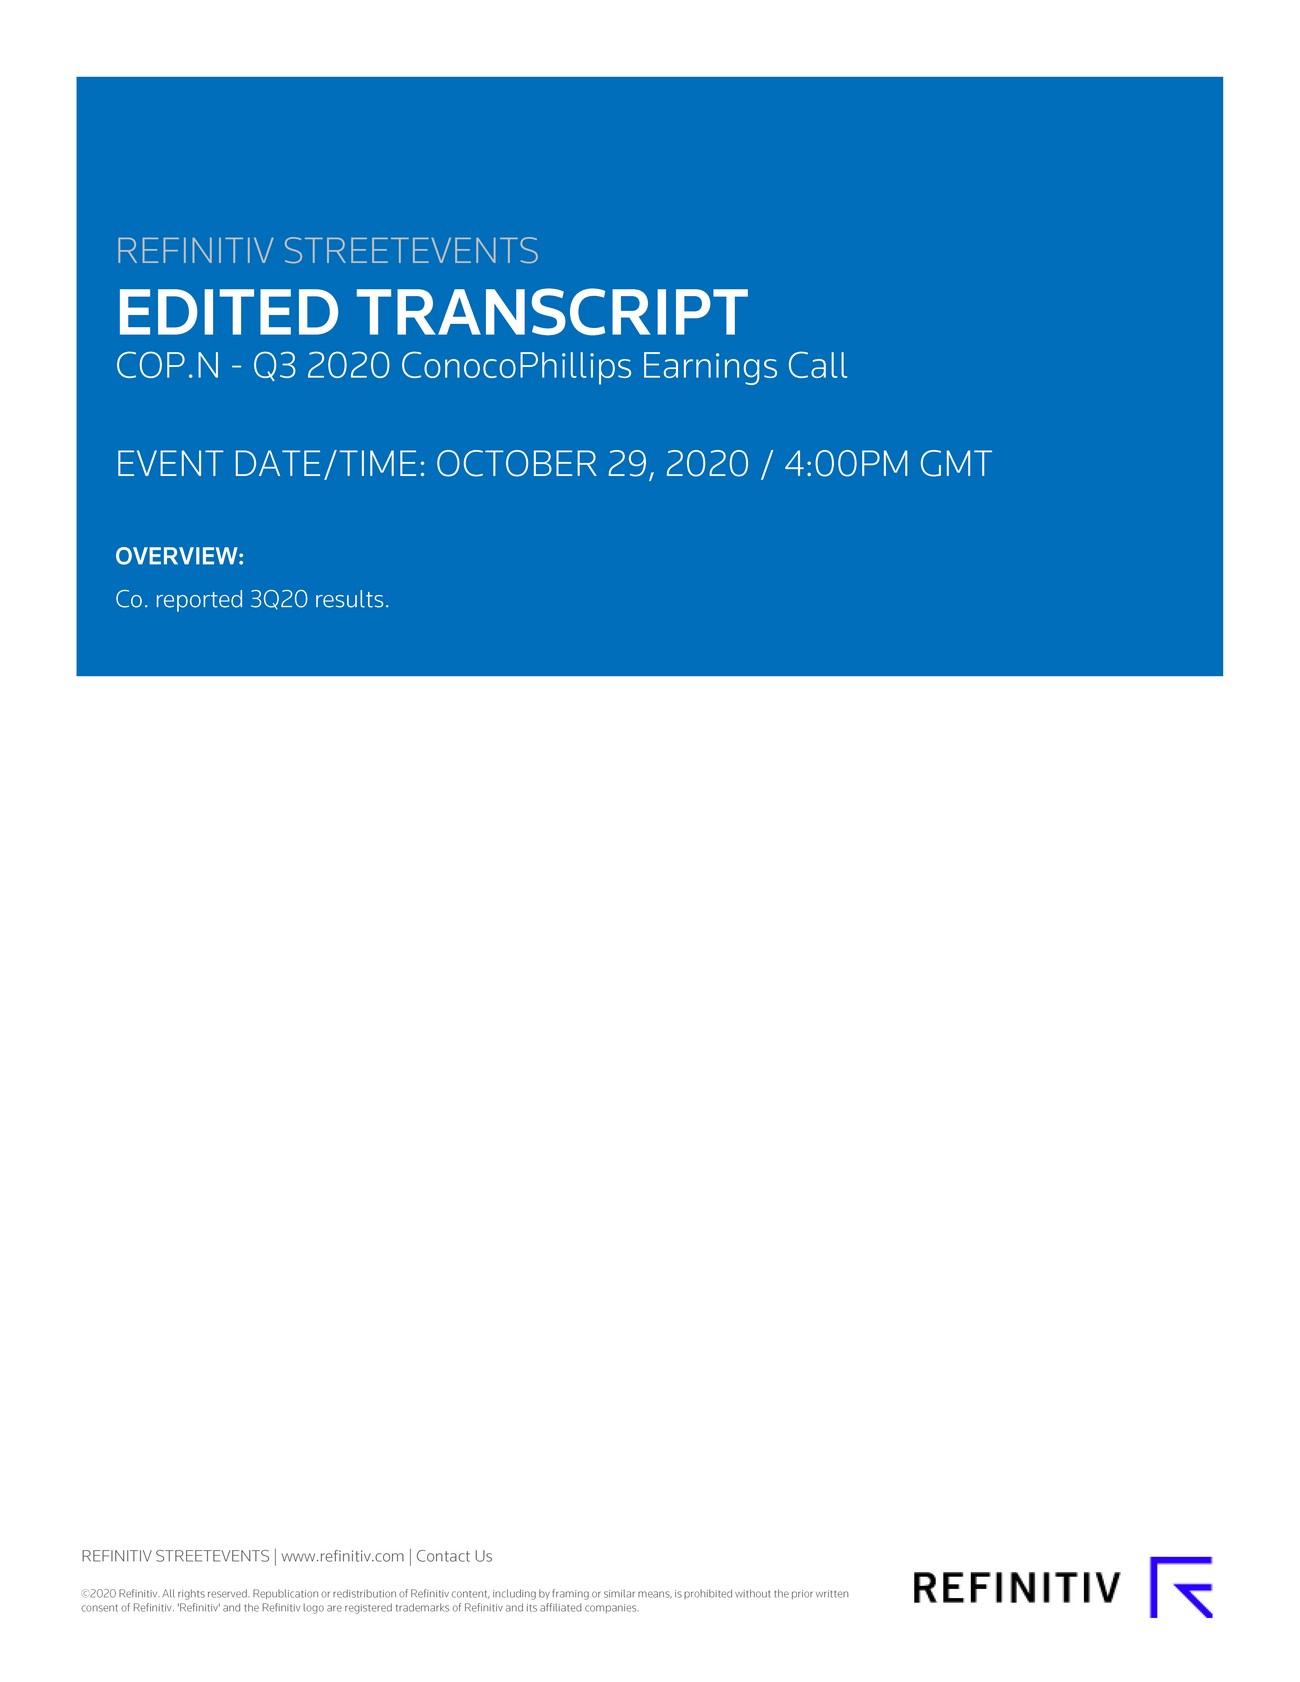 New Microsoft Word Document (2)_cop-usq_transcript_2020-10-29_page_01.jpg